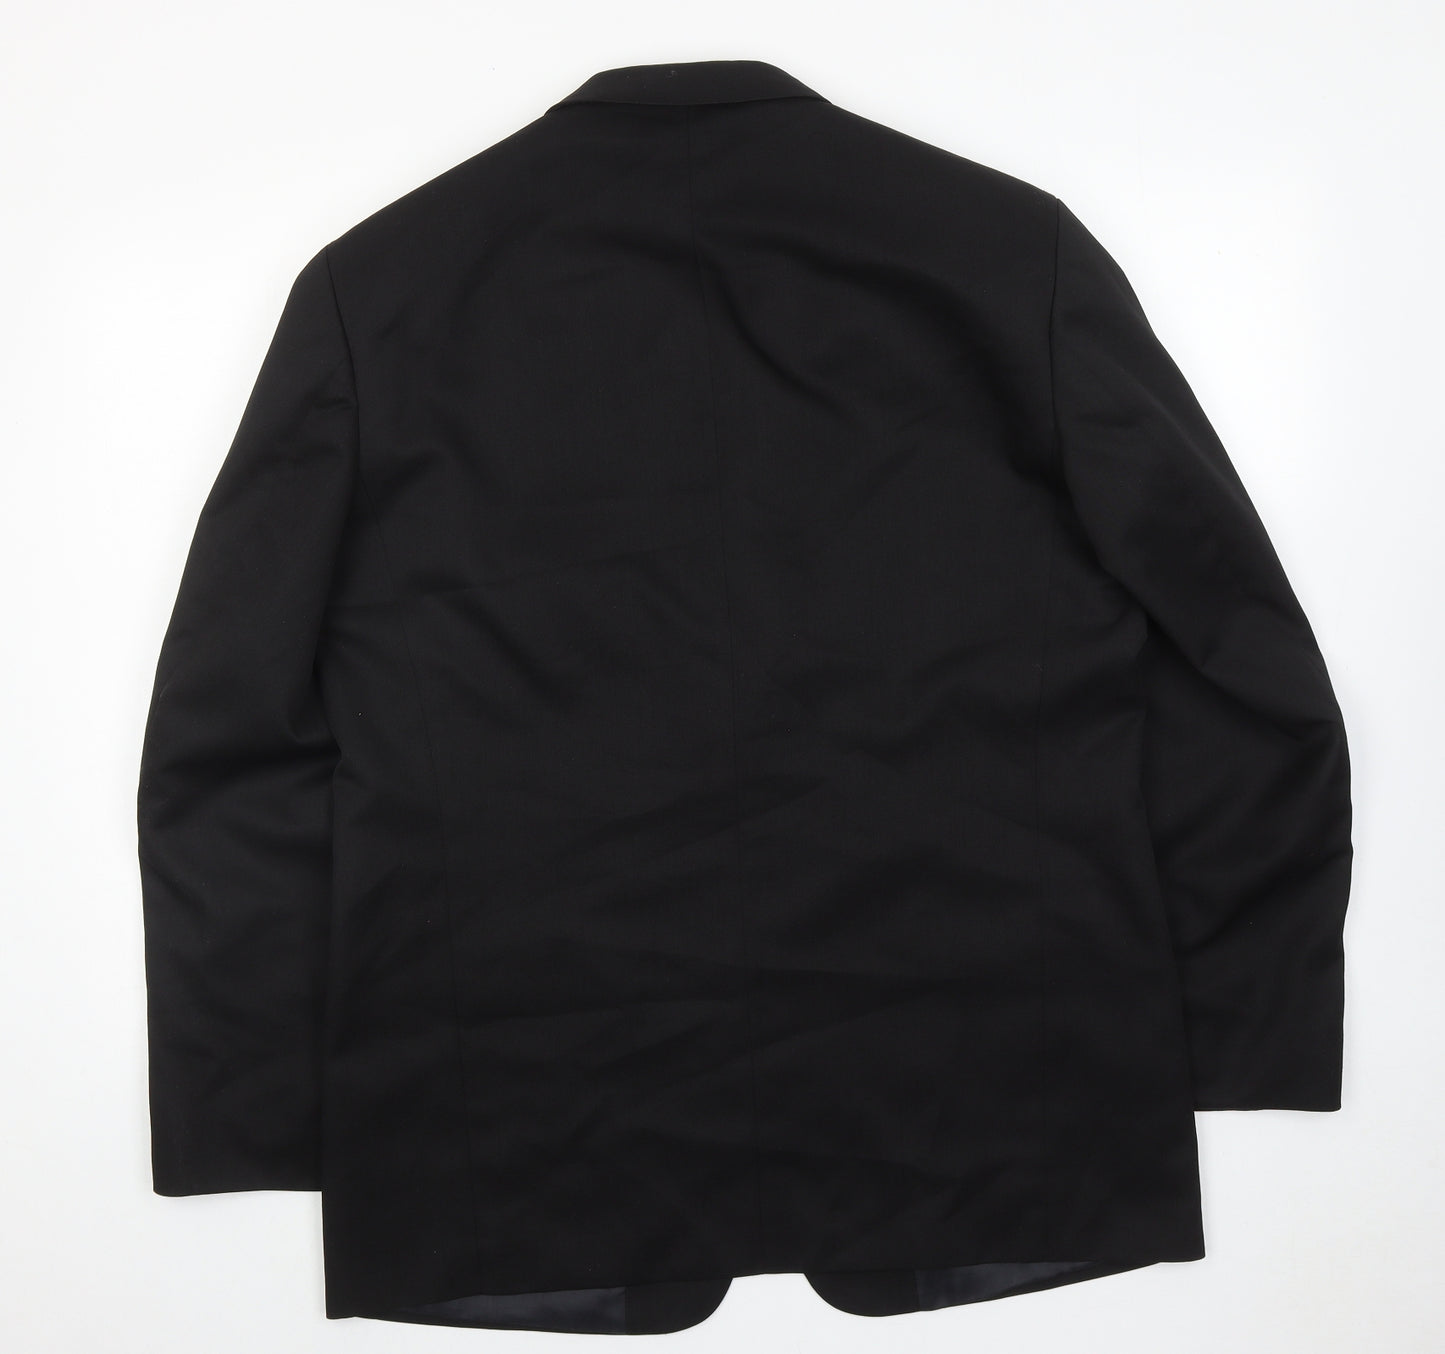 Zantos Mens Black Polyester Jacket Suit Jacket Size 42 Regular